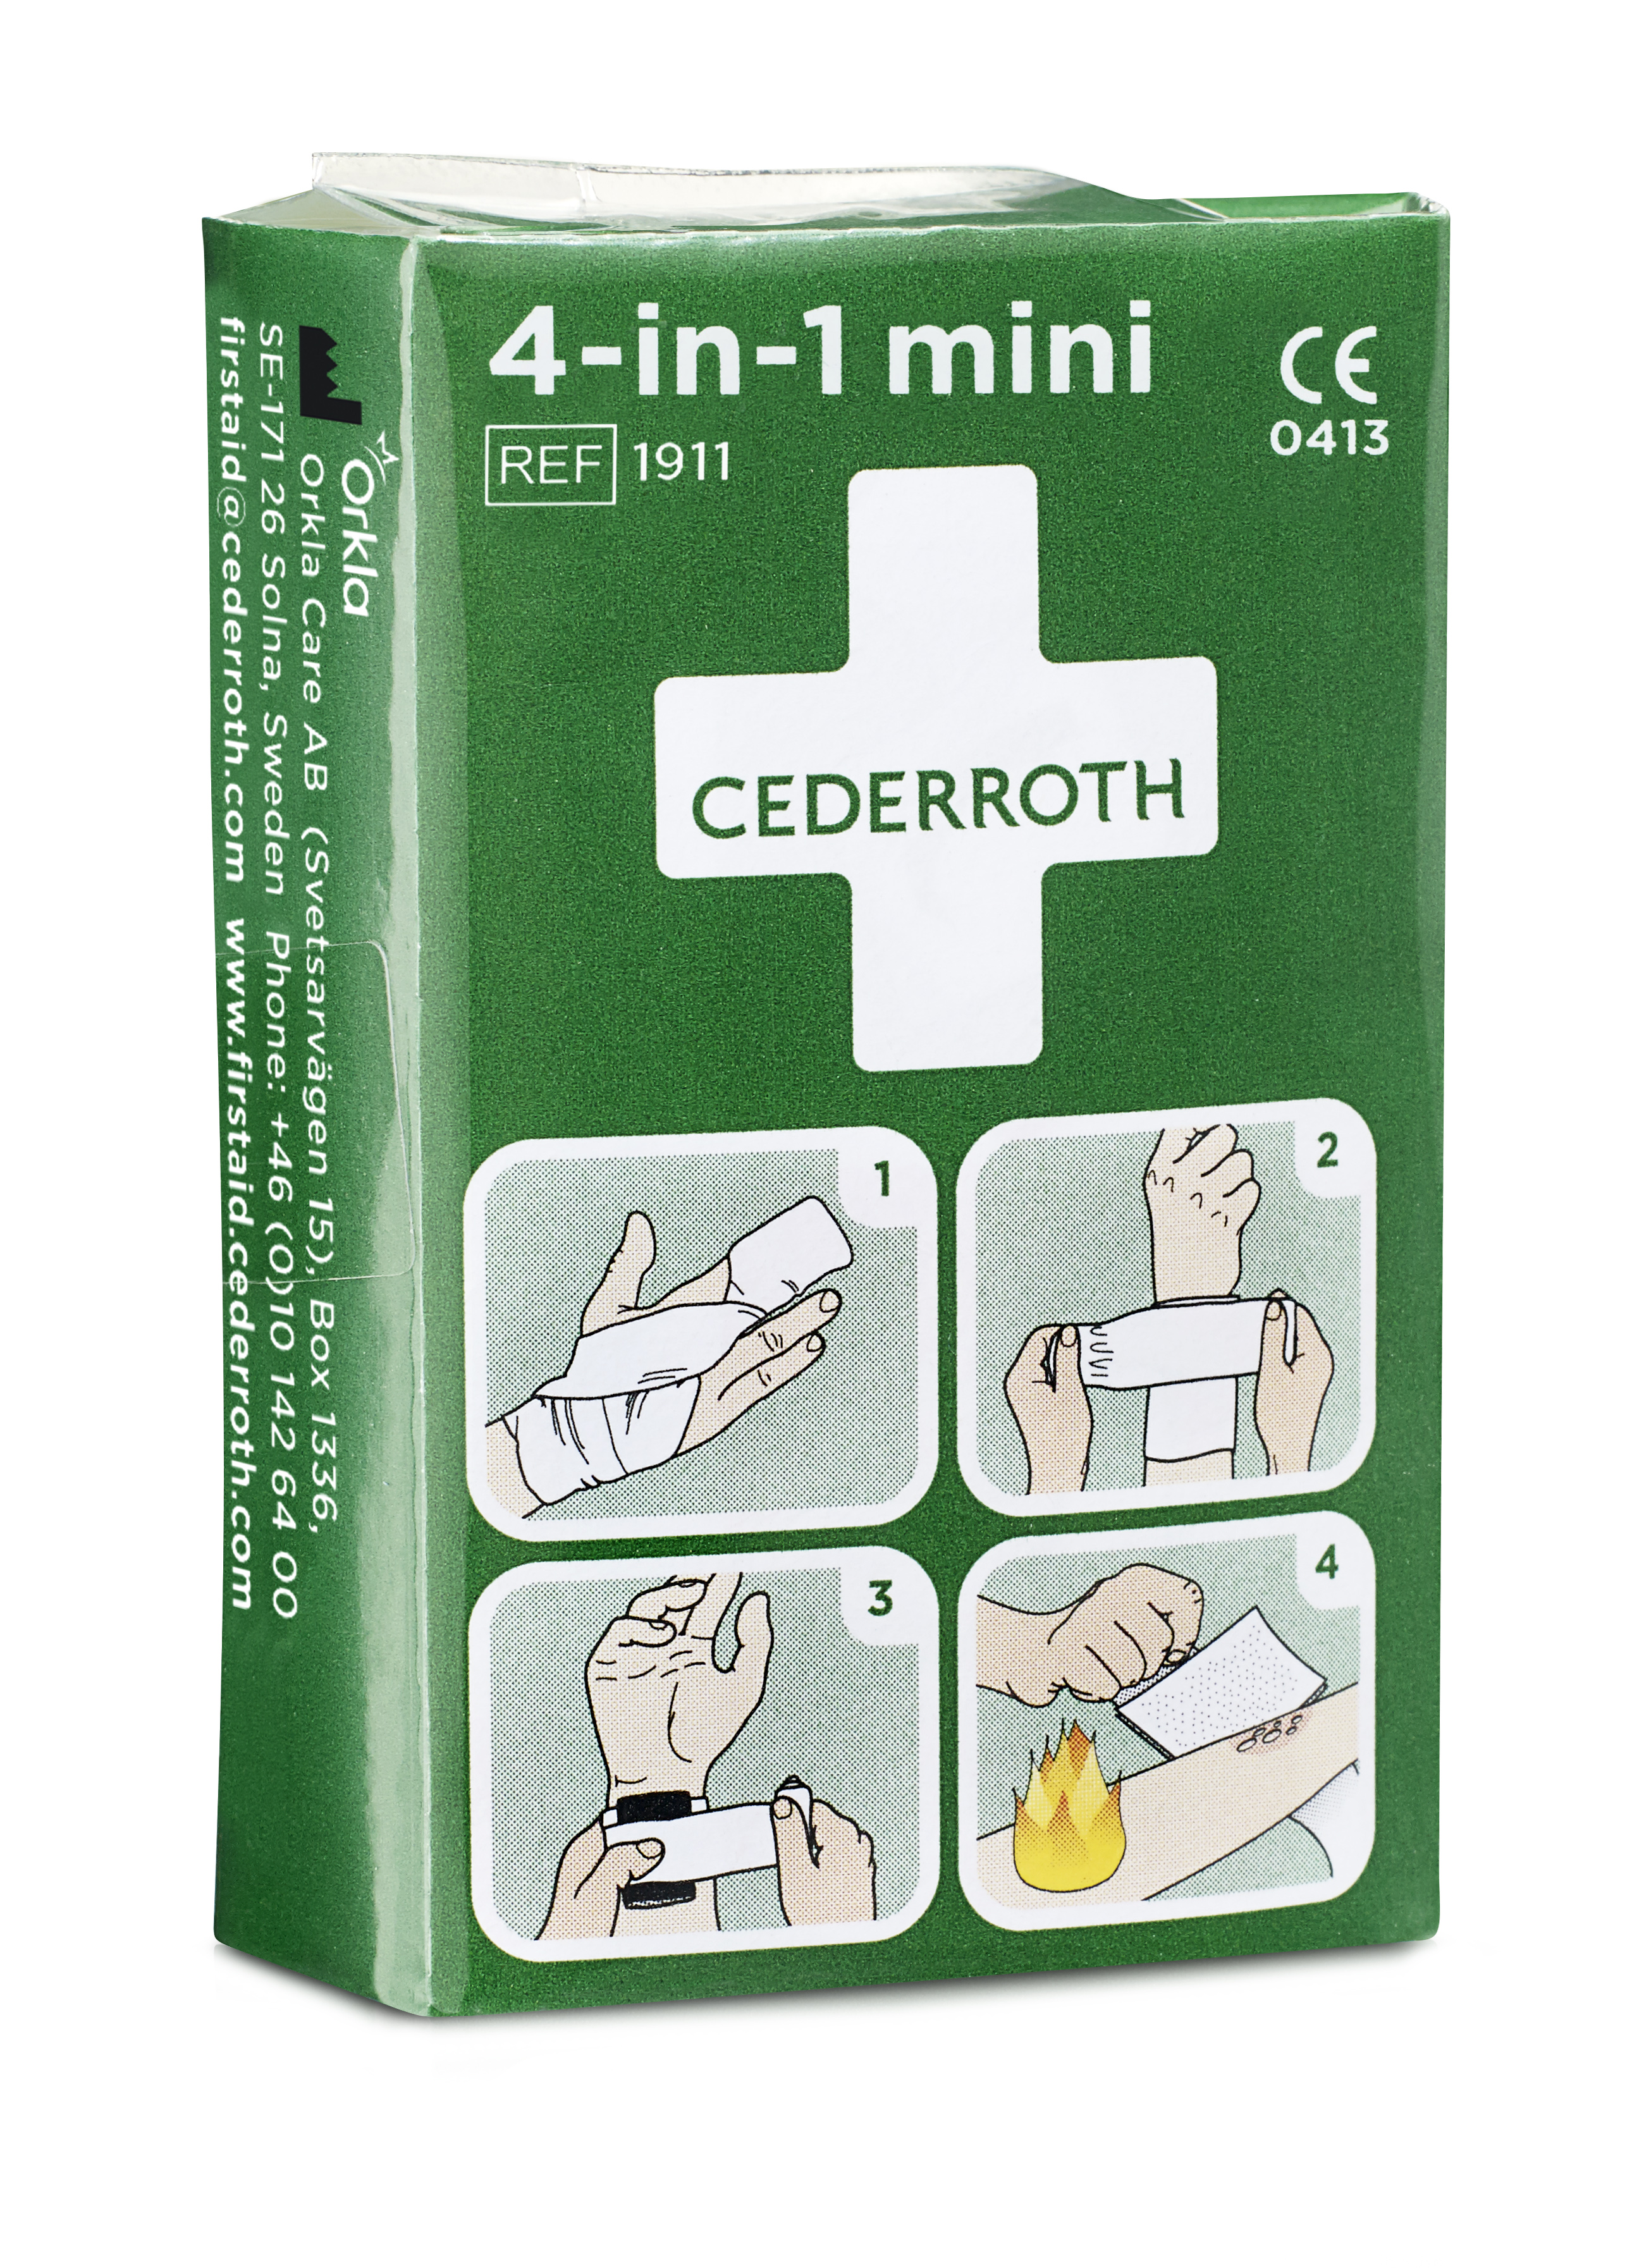 CEDERROTH 4-in-1 mini Blutstiller Wundverband